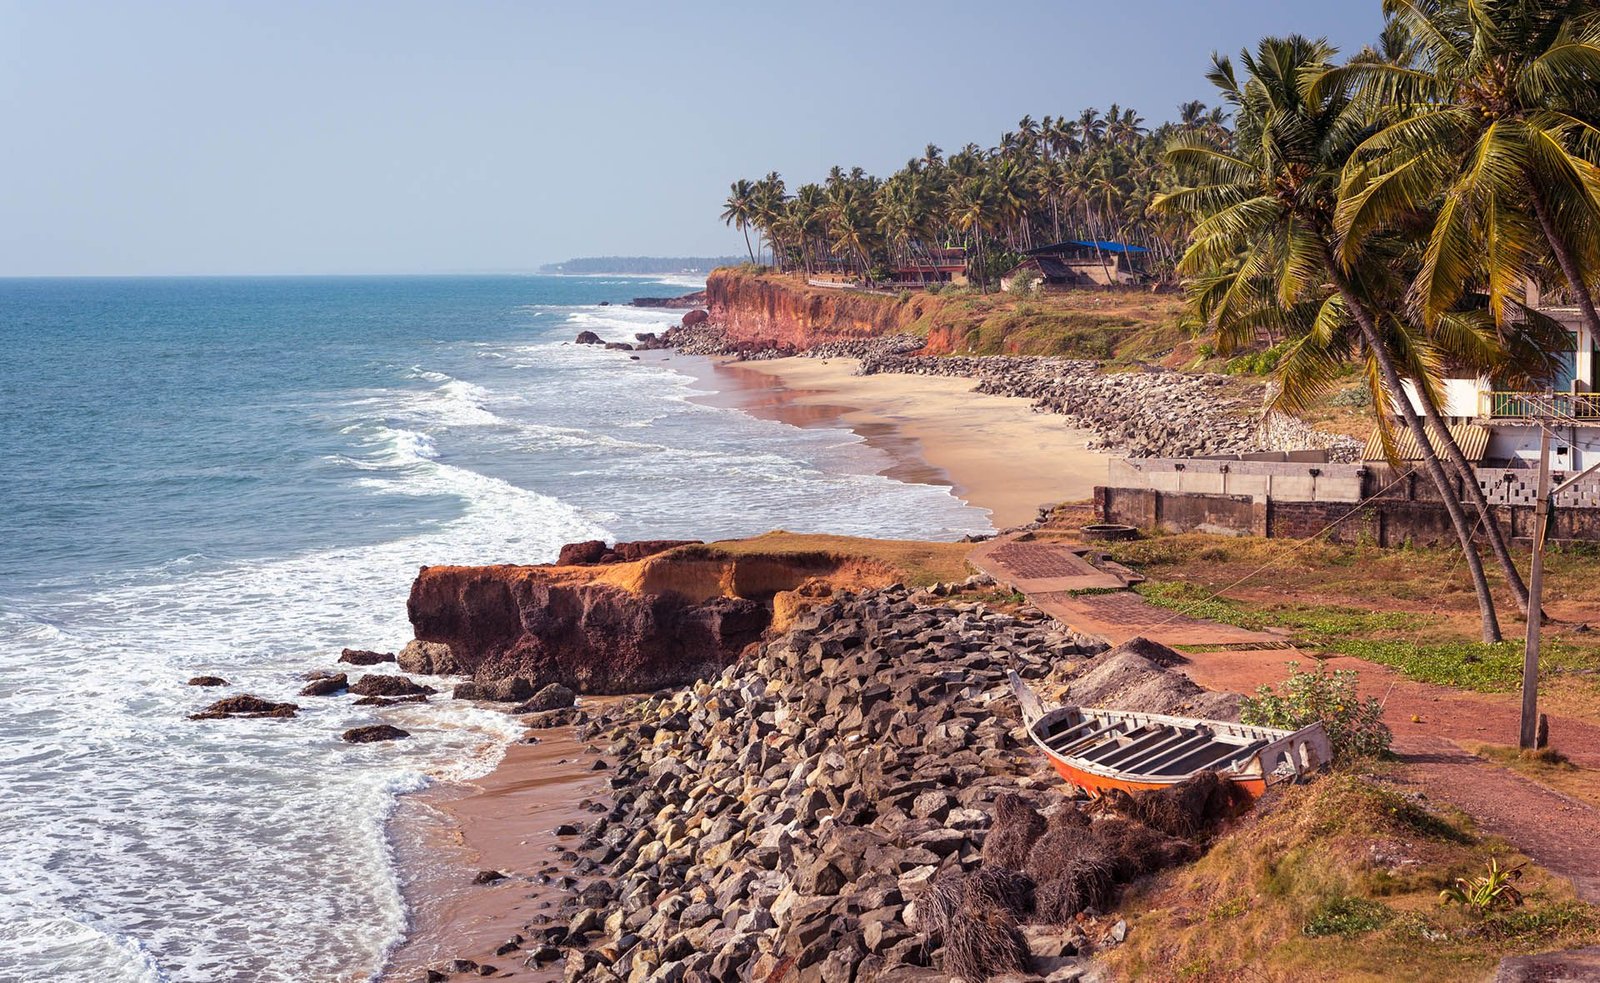 Beaches in Kerala​